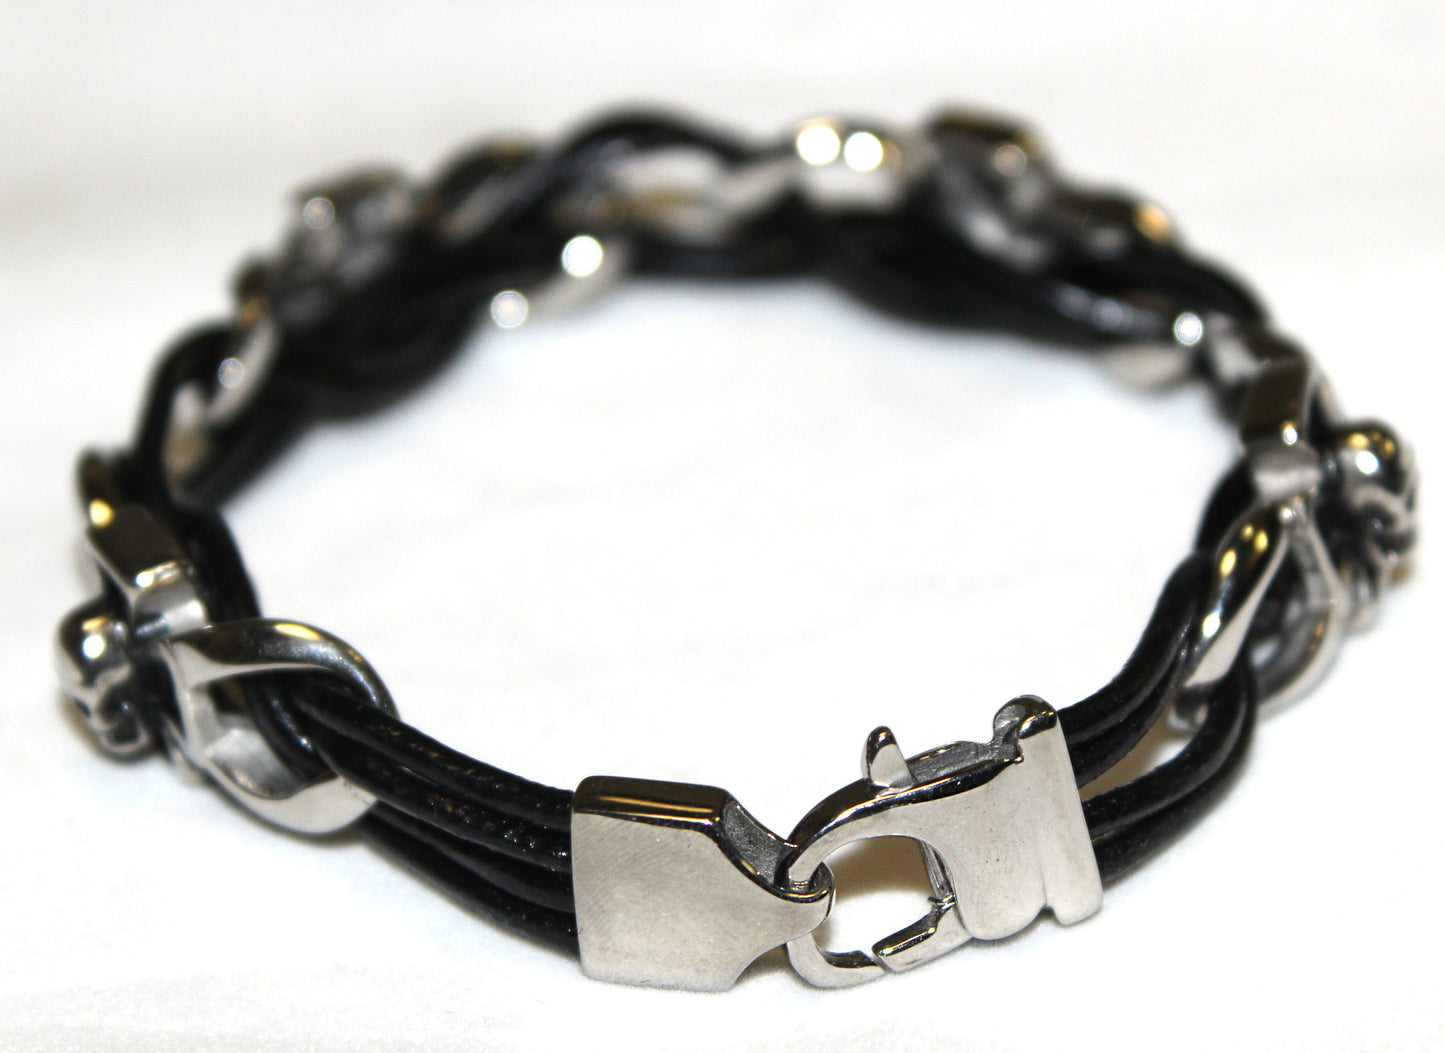 Stainless Steel Cross and Skull Leather Bracelet- UDINC0437